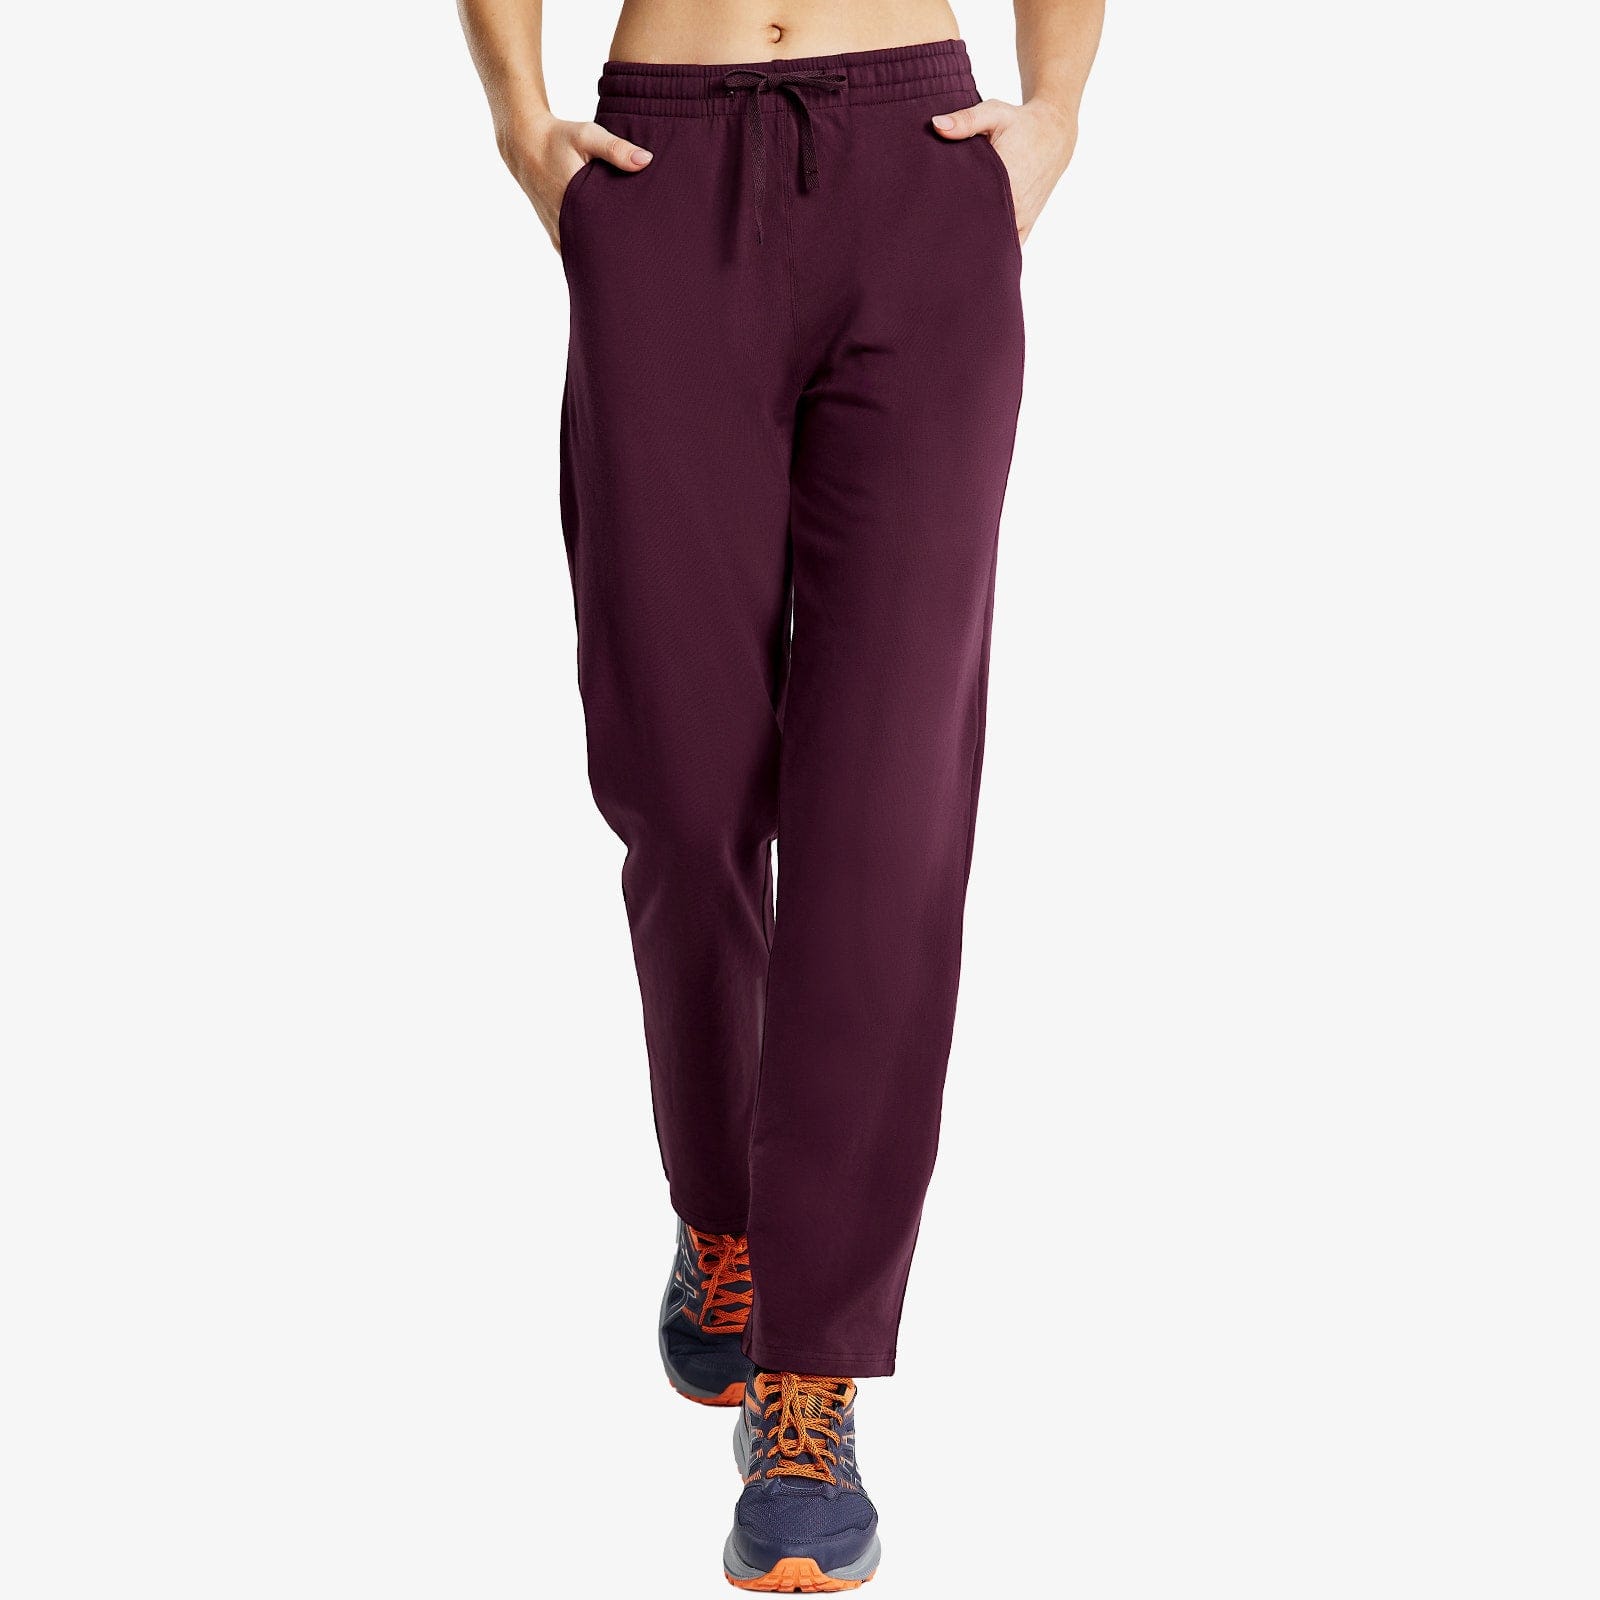 Women's Cotton Sweatpants Casual Drawstring Pants - Wine Red / XS